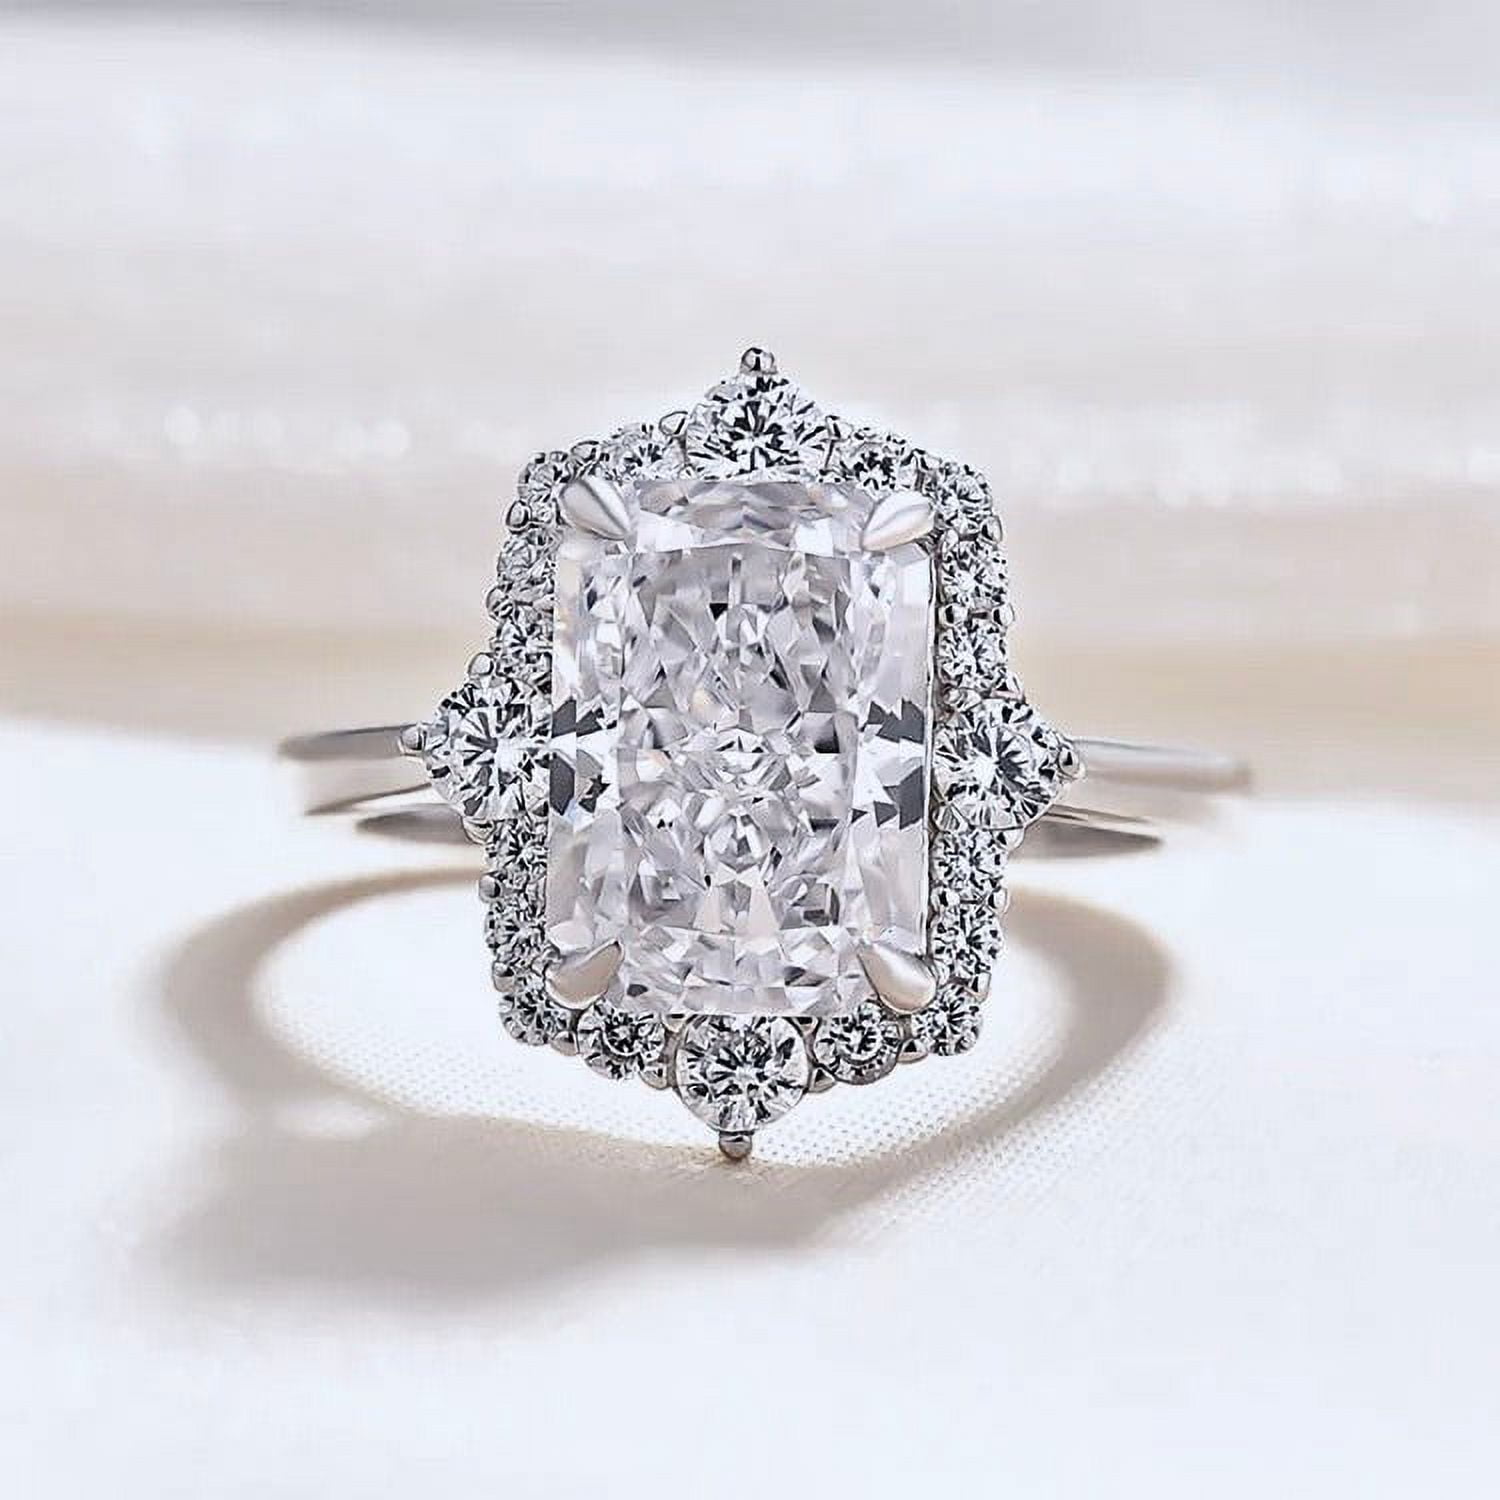 Beverly Hills Jewelers 1 Carat Diamond Engagement Ring - 14 Karat White  Gold Diamond Ring for Women Diamond Engagement Ring (Size 4) | Amazon.com